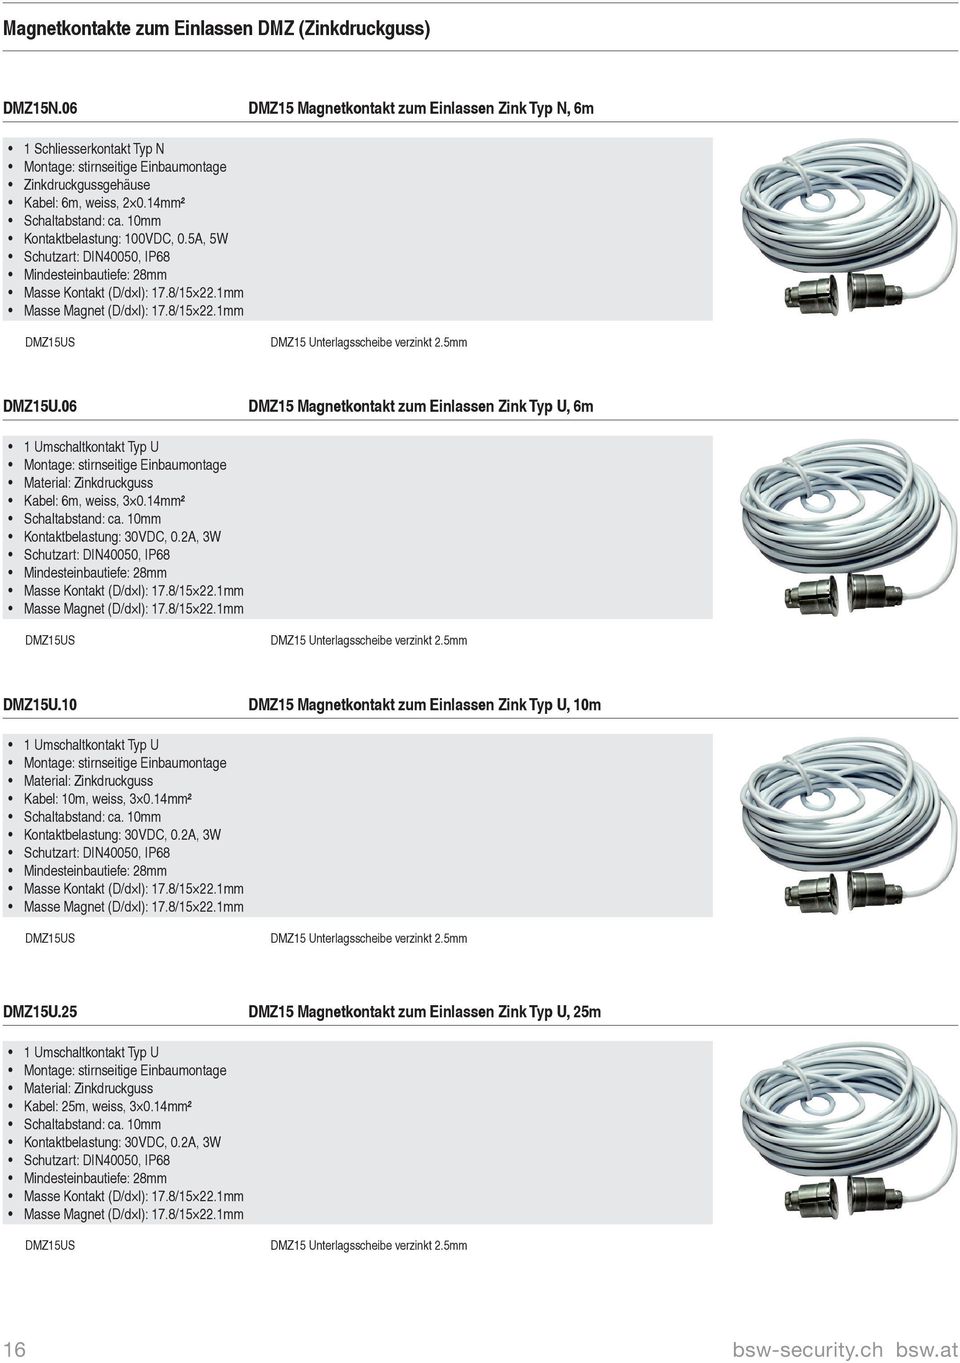 06 DMZ15 Magnetkontakt zum Einlassen Zink Typ U, 6m Material: Zinkdruckguss Kabel: 6m, weiss, 3 0.14mm² Kontaktbelastung: 30VDC, 0.2A, 3W Masse Kontakt (D/d l): 17.8/15 22.